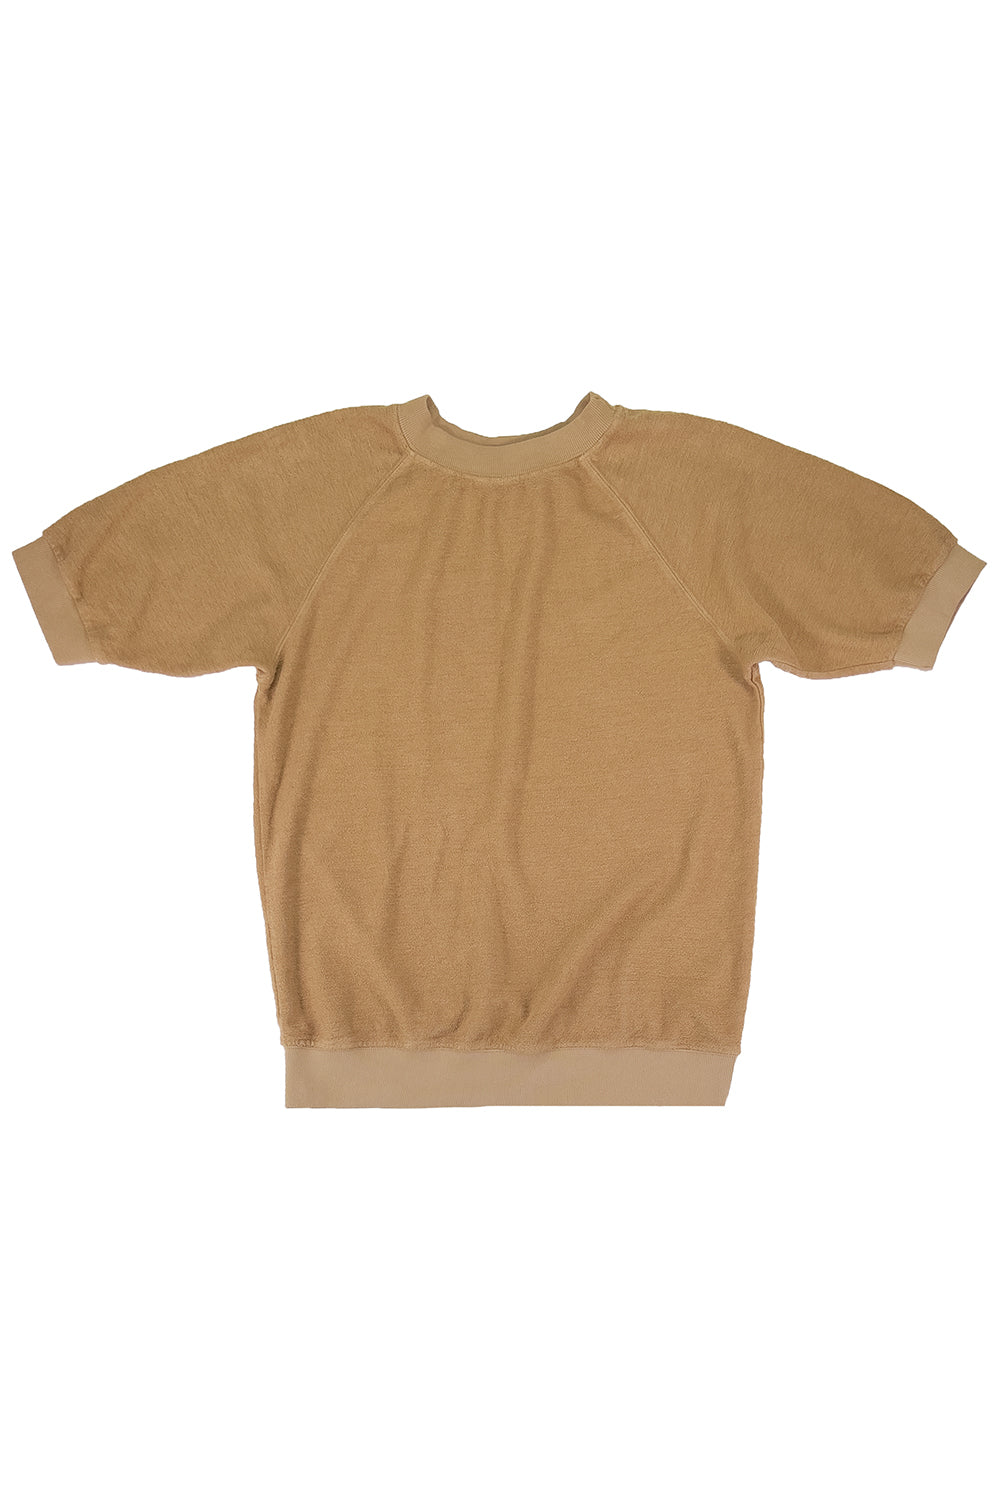 Short Sleeve Raglan Sherpa Sweatshirt | Jungmaven Hemp Clothing & Accessories / Color: Coyote